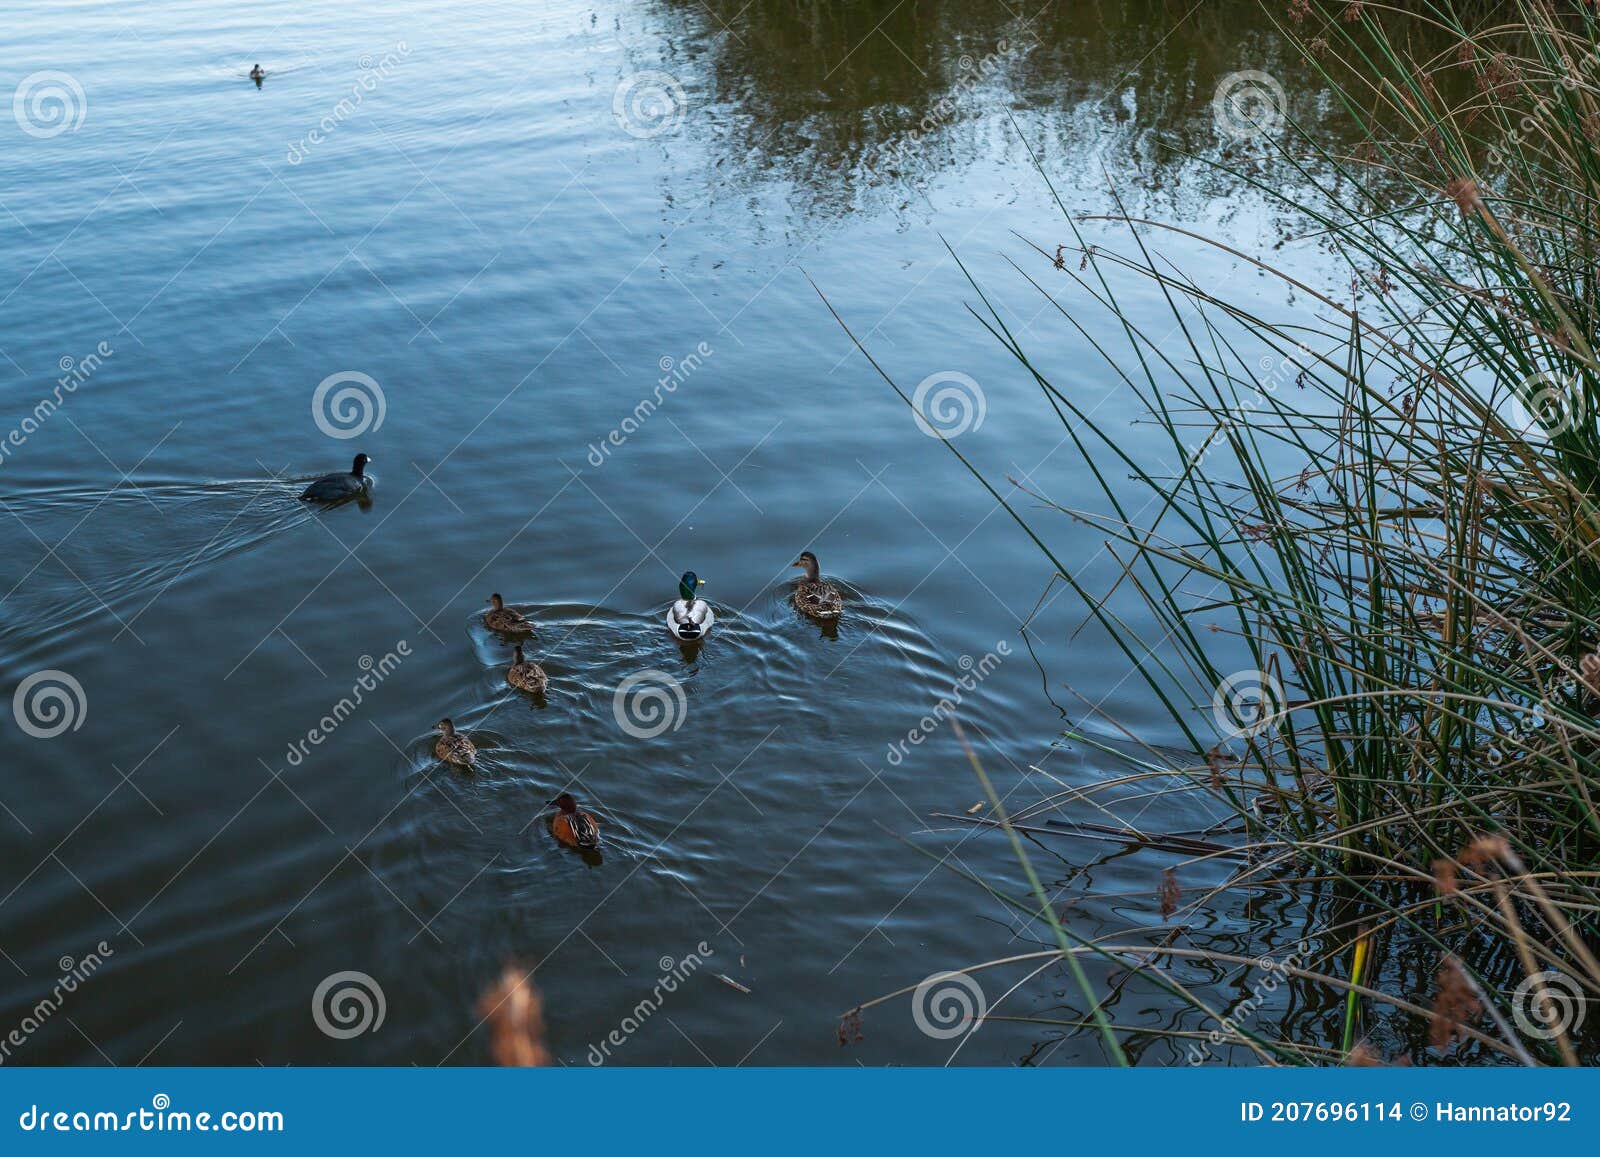 oso flaco lake at sunset, and ducks.